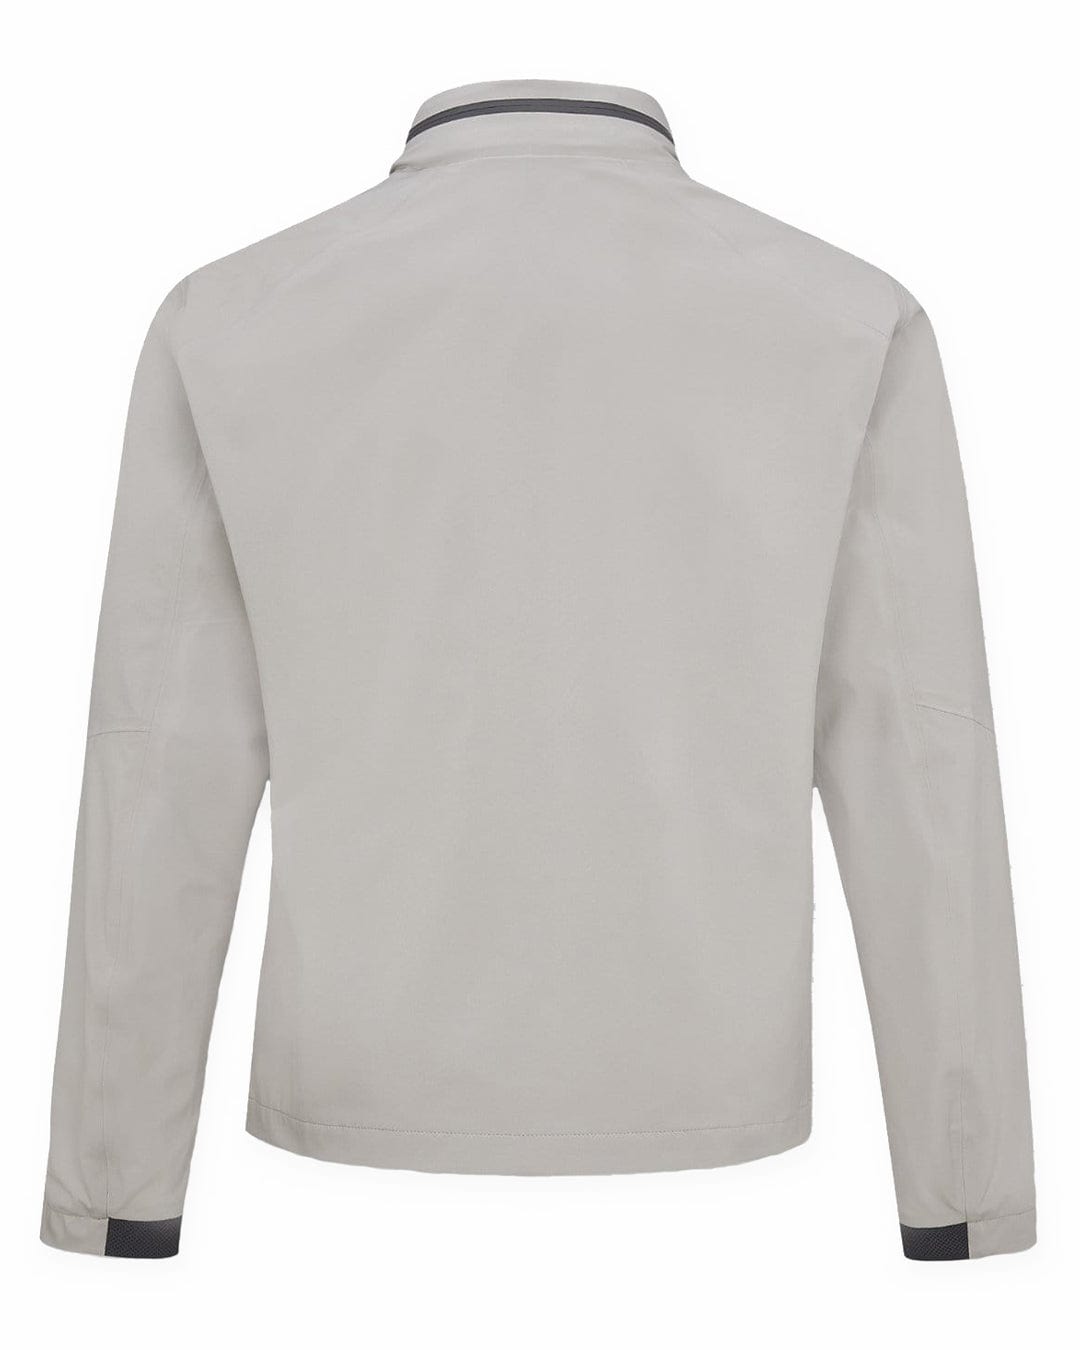 Hackett Outerwear Hackett White Soft Jacket